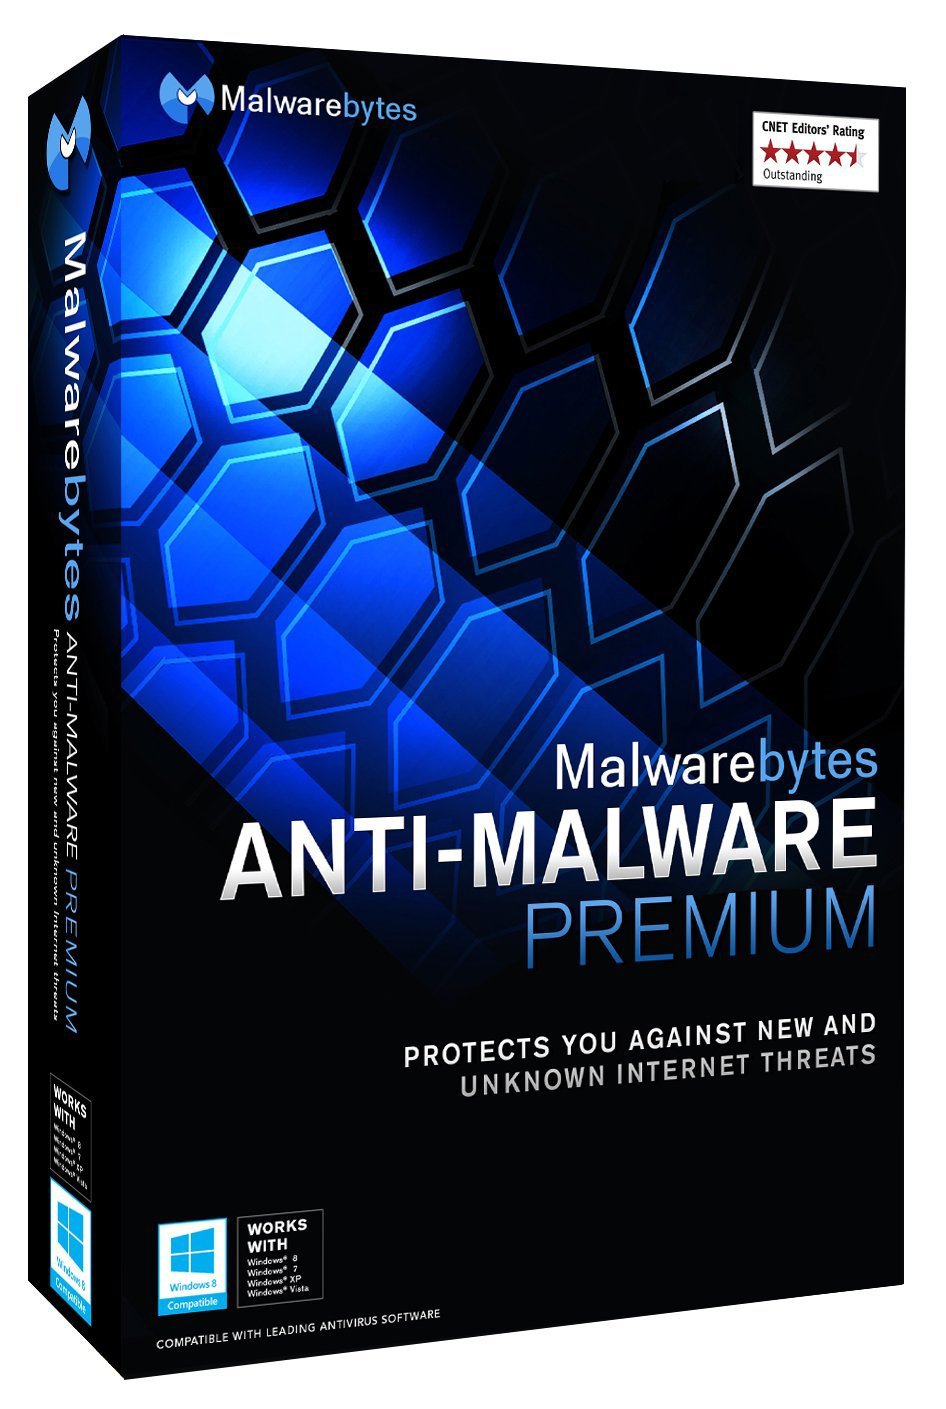 Malwarebytes Anti-Malware 4.2.2.190 Crack With Keygen